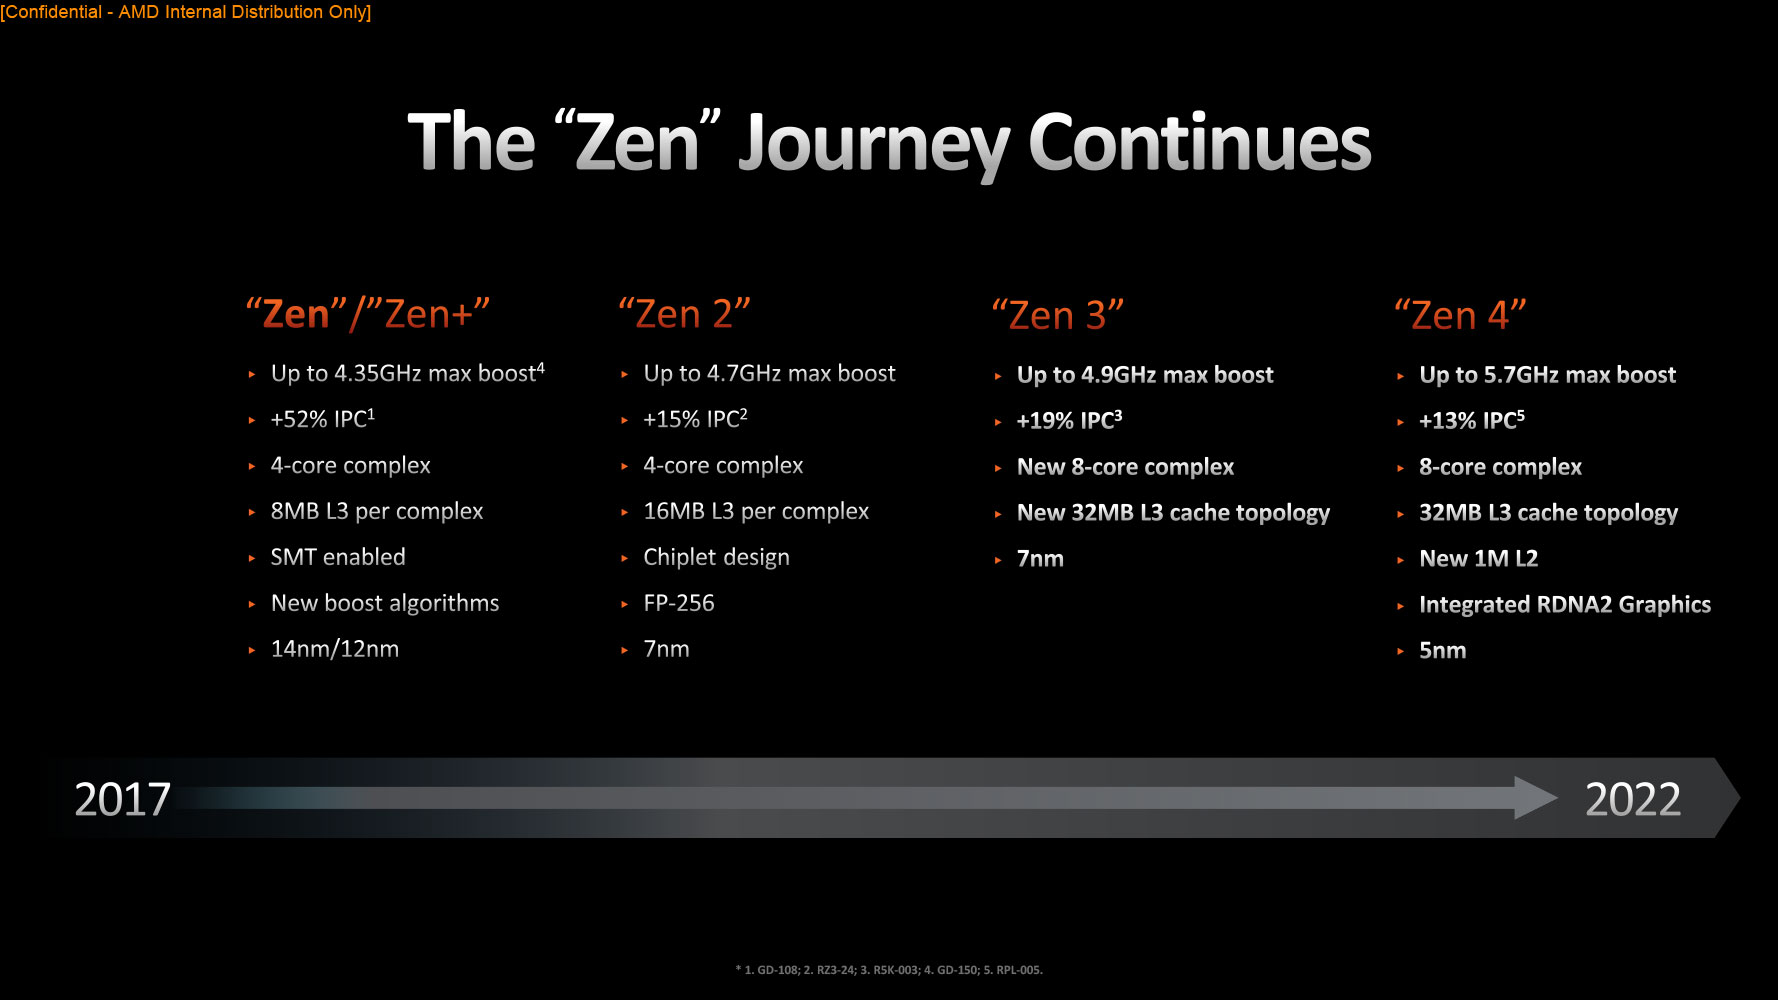 AMD Ryzen 5 7600X And Ryzen 7 7700X Review: Mainstream Zen 4